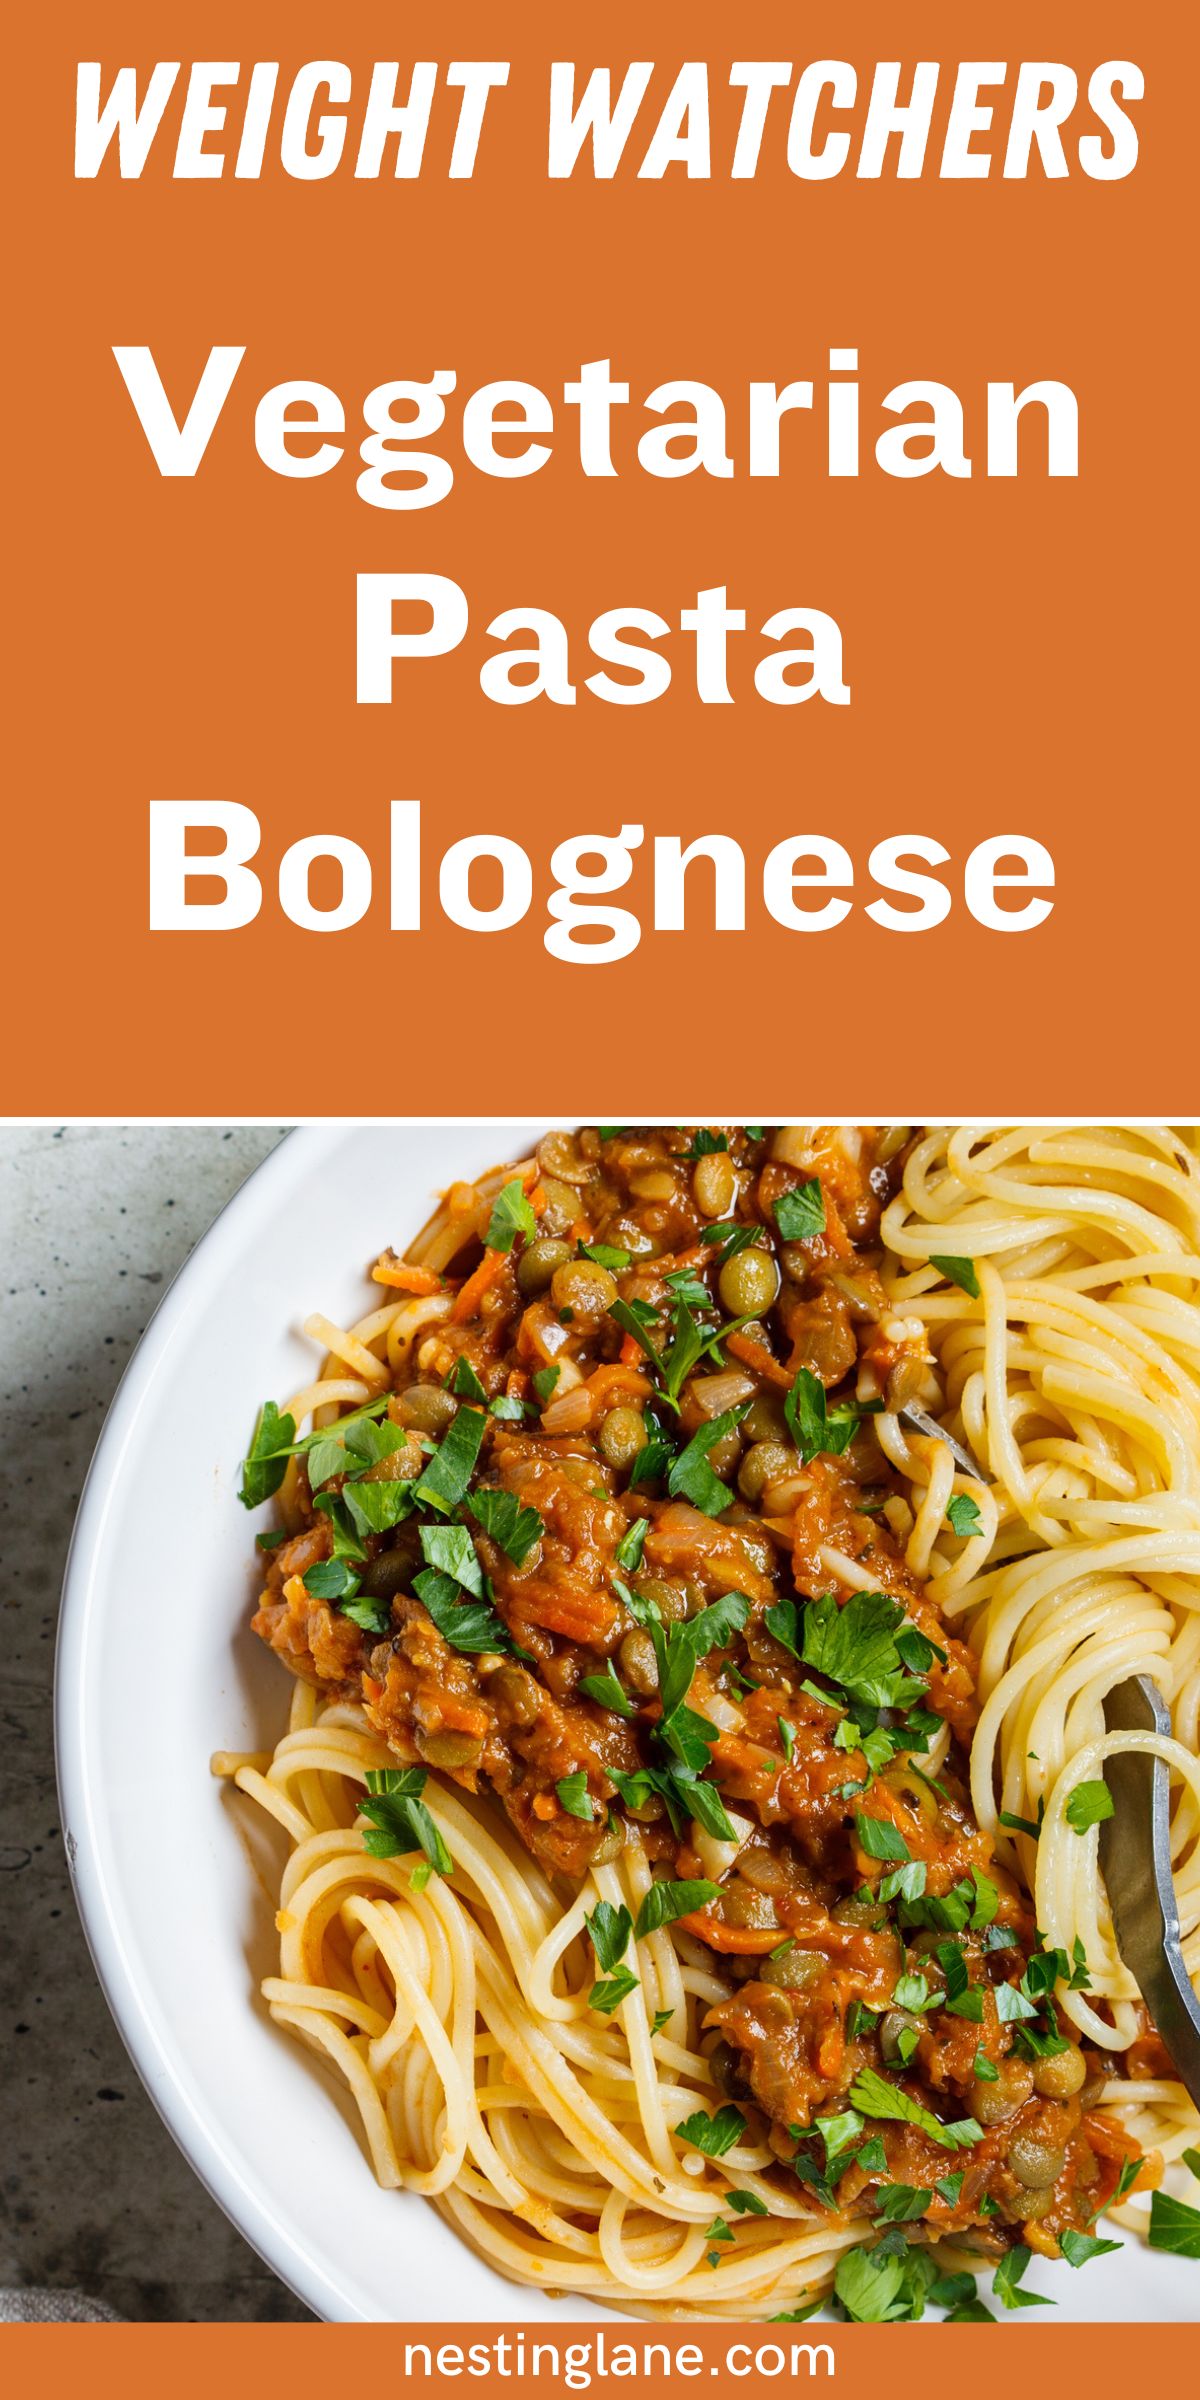 Vegetarian Weight Watchers Pasta Bolognese Recipe Graphic.